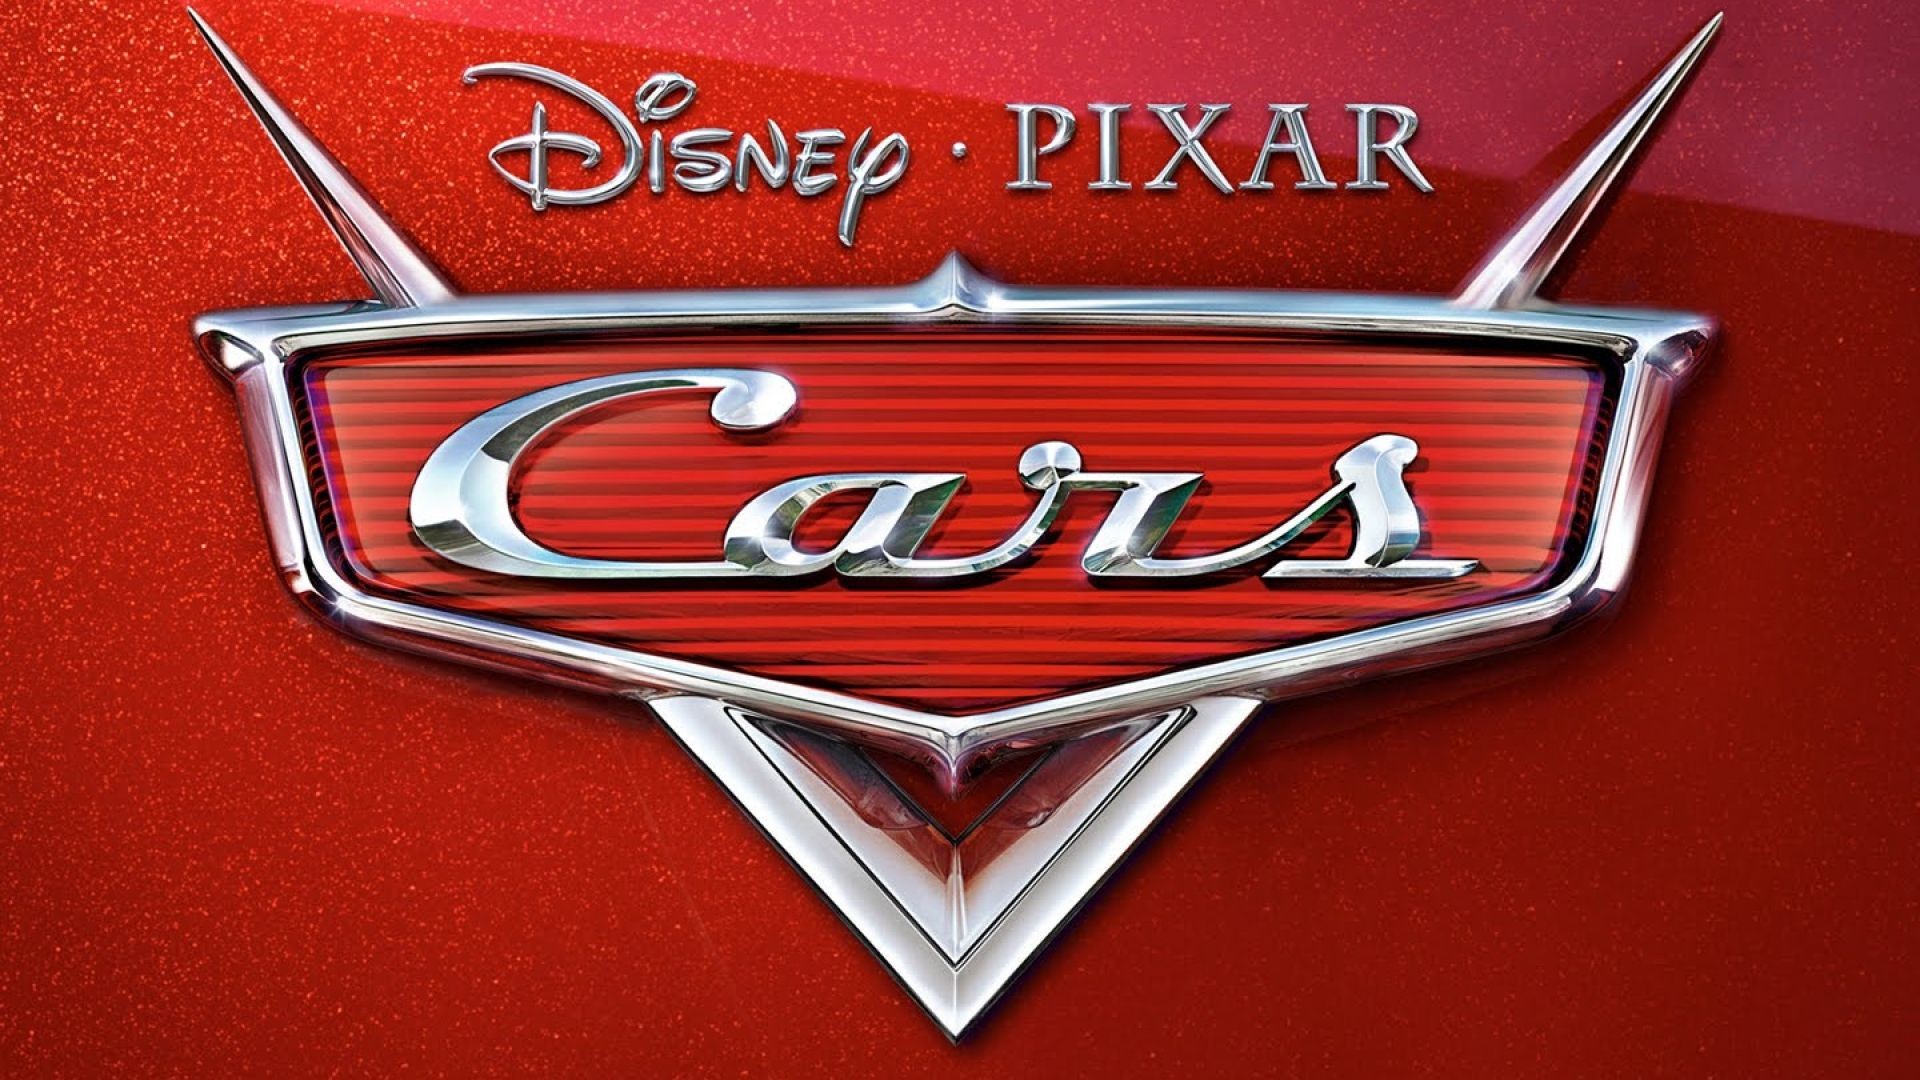 1920x1080 Logo-Disney-Pixar-Cars-Wallpaper.jpg